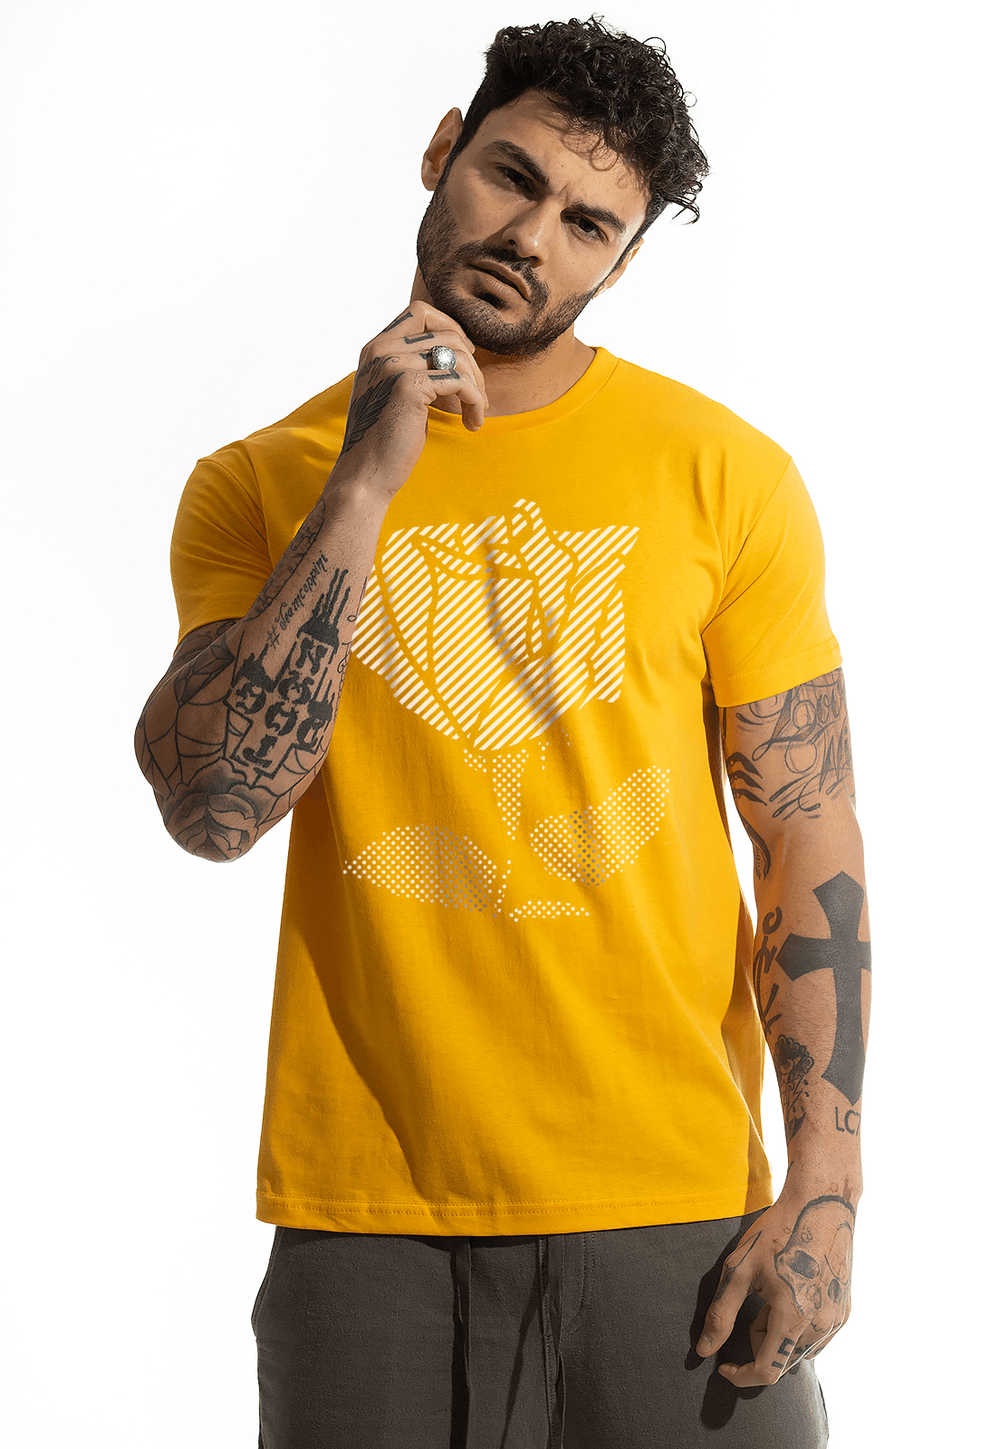 Camiseta Arimlap Flor Tracejada Cor:Amarelo Queimado;Tamanho:M;Genero:Masculino